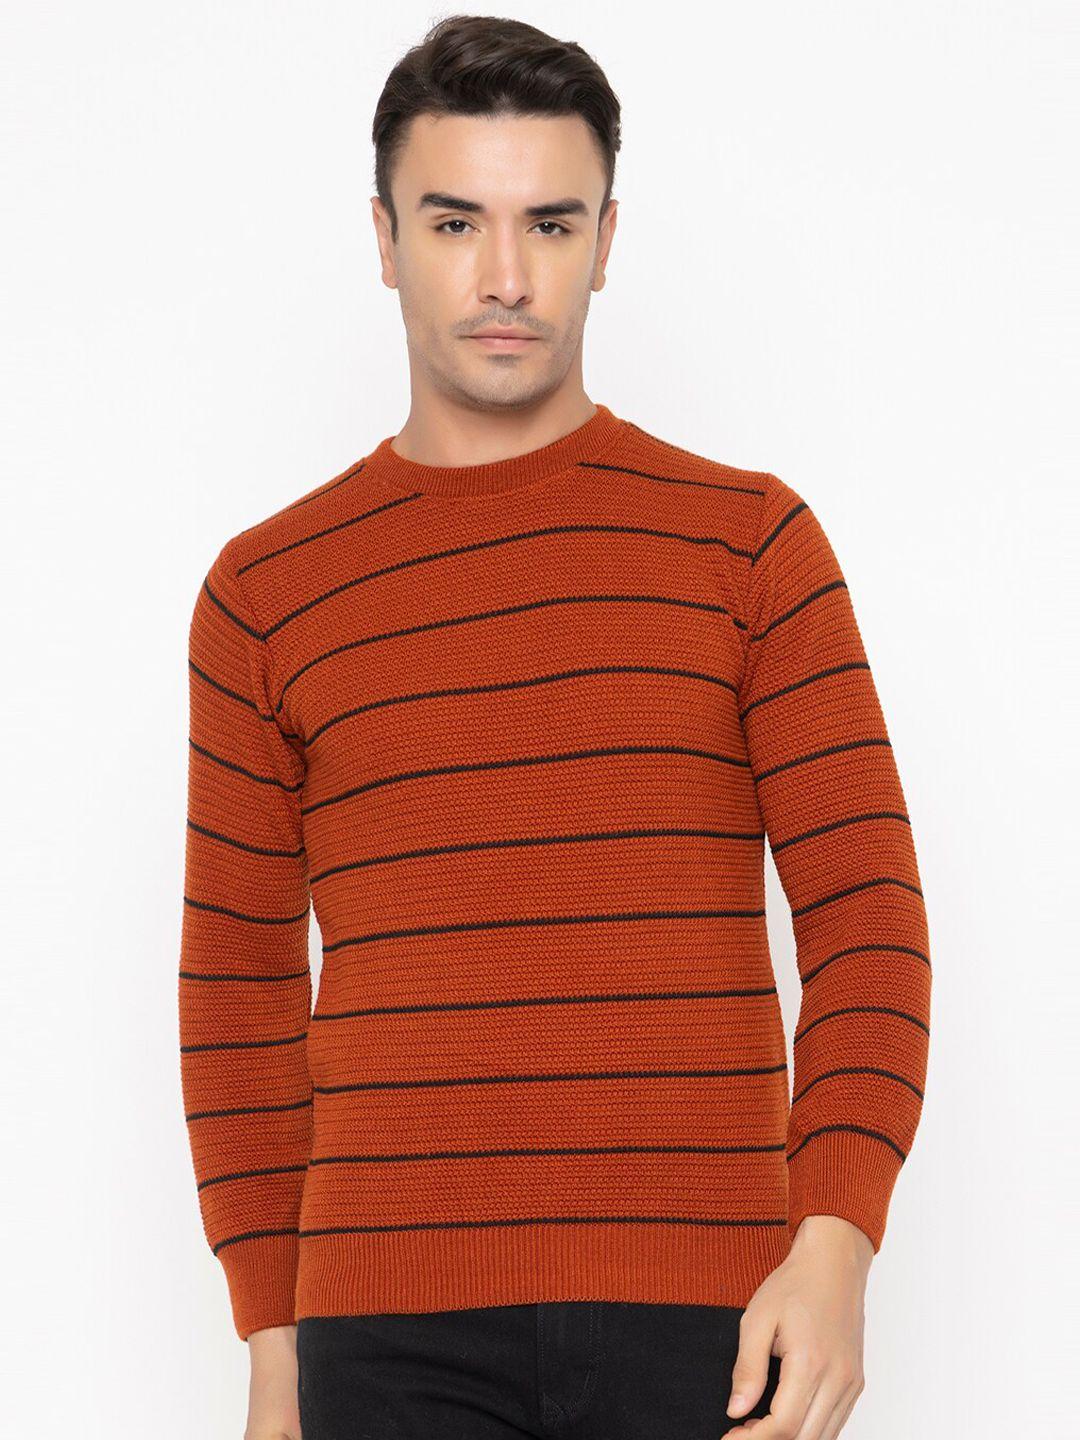 tysort striped wool pullover sweater